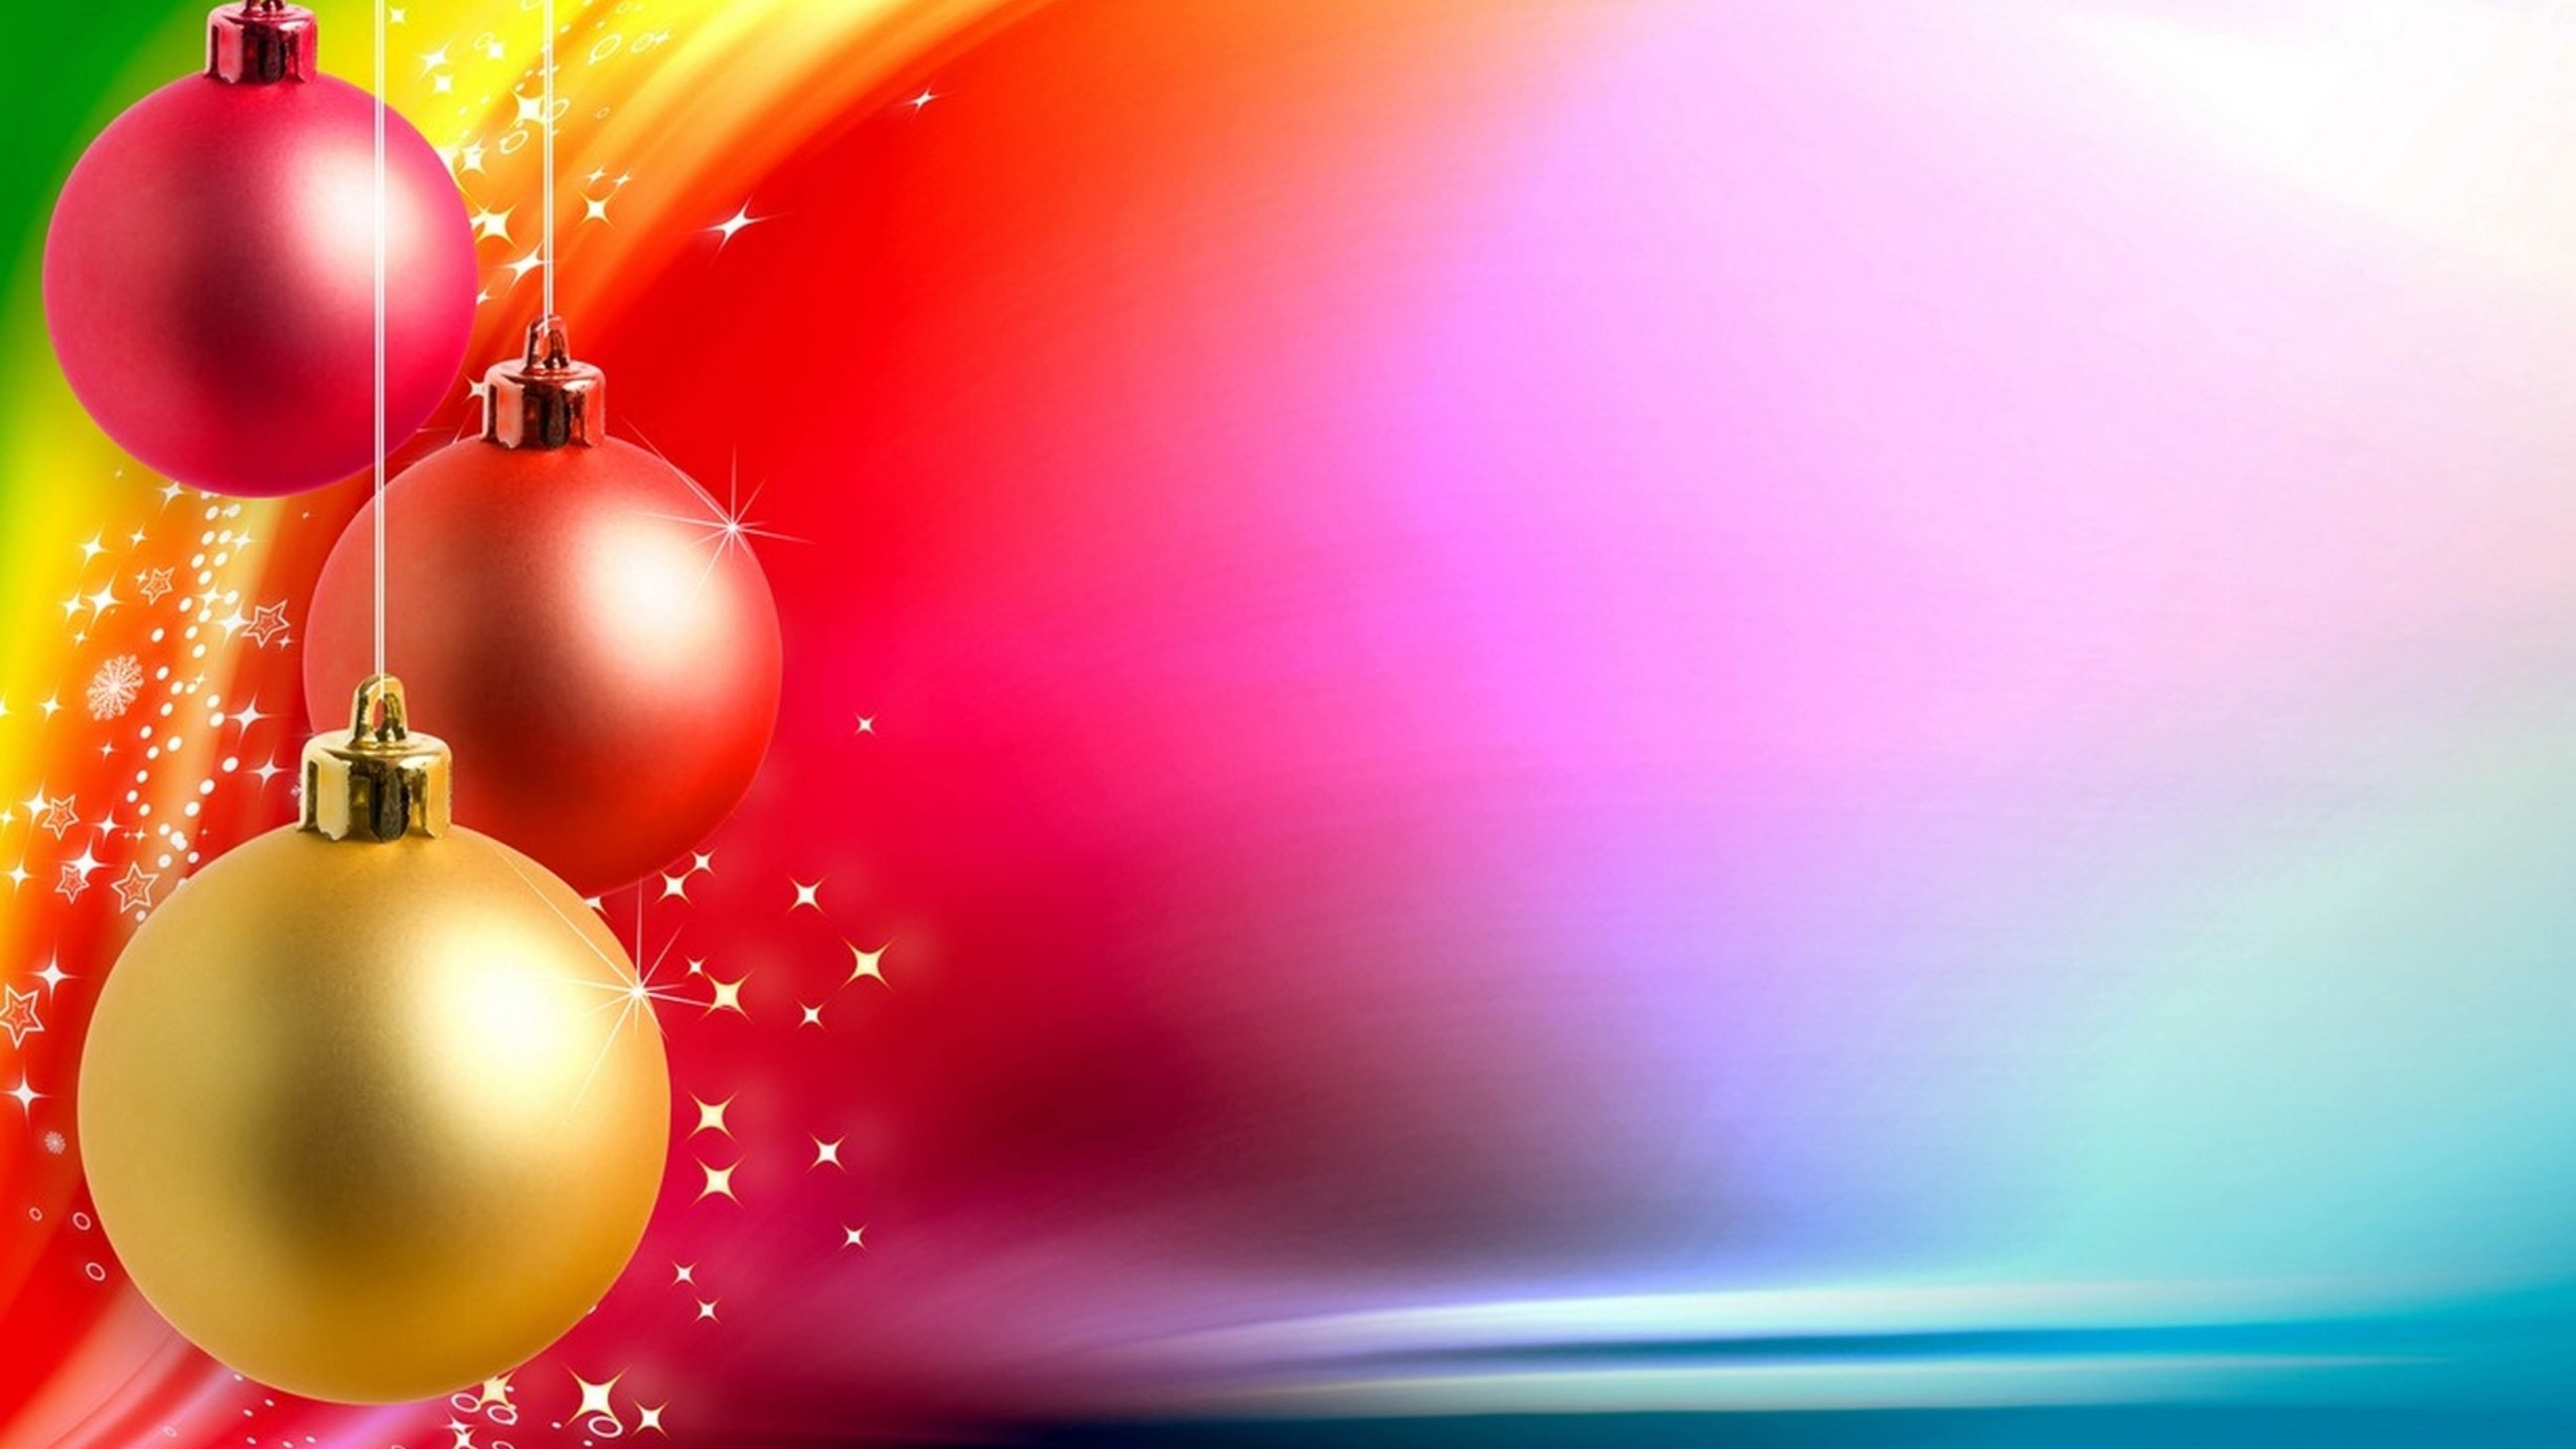 Colorful Christmas Background 4k Hd Wallpaper For Desktop : 